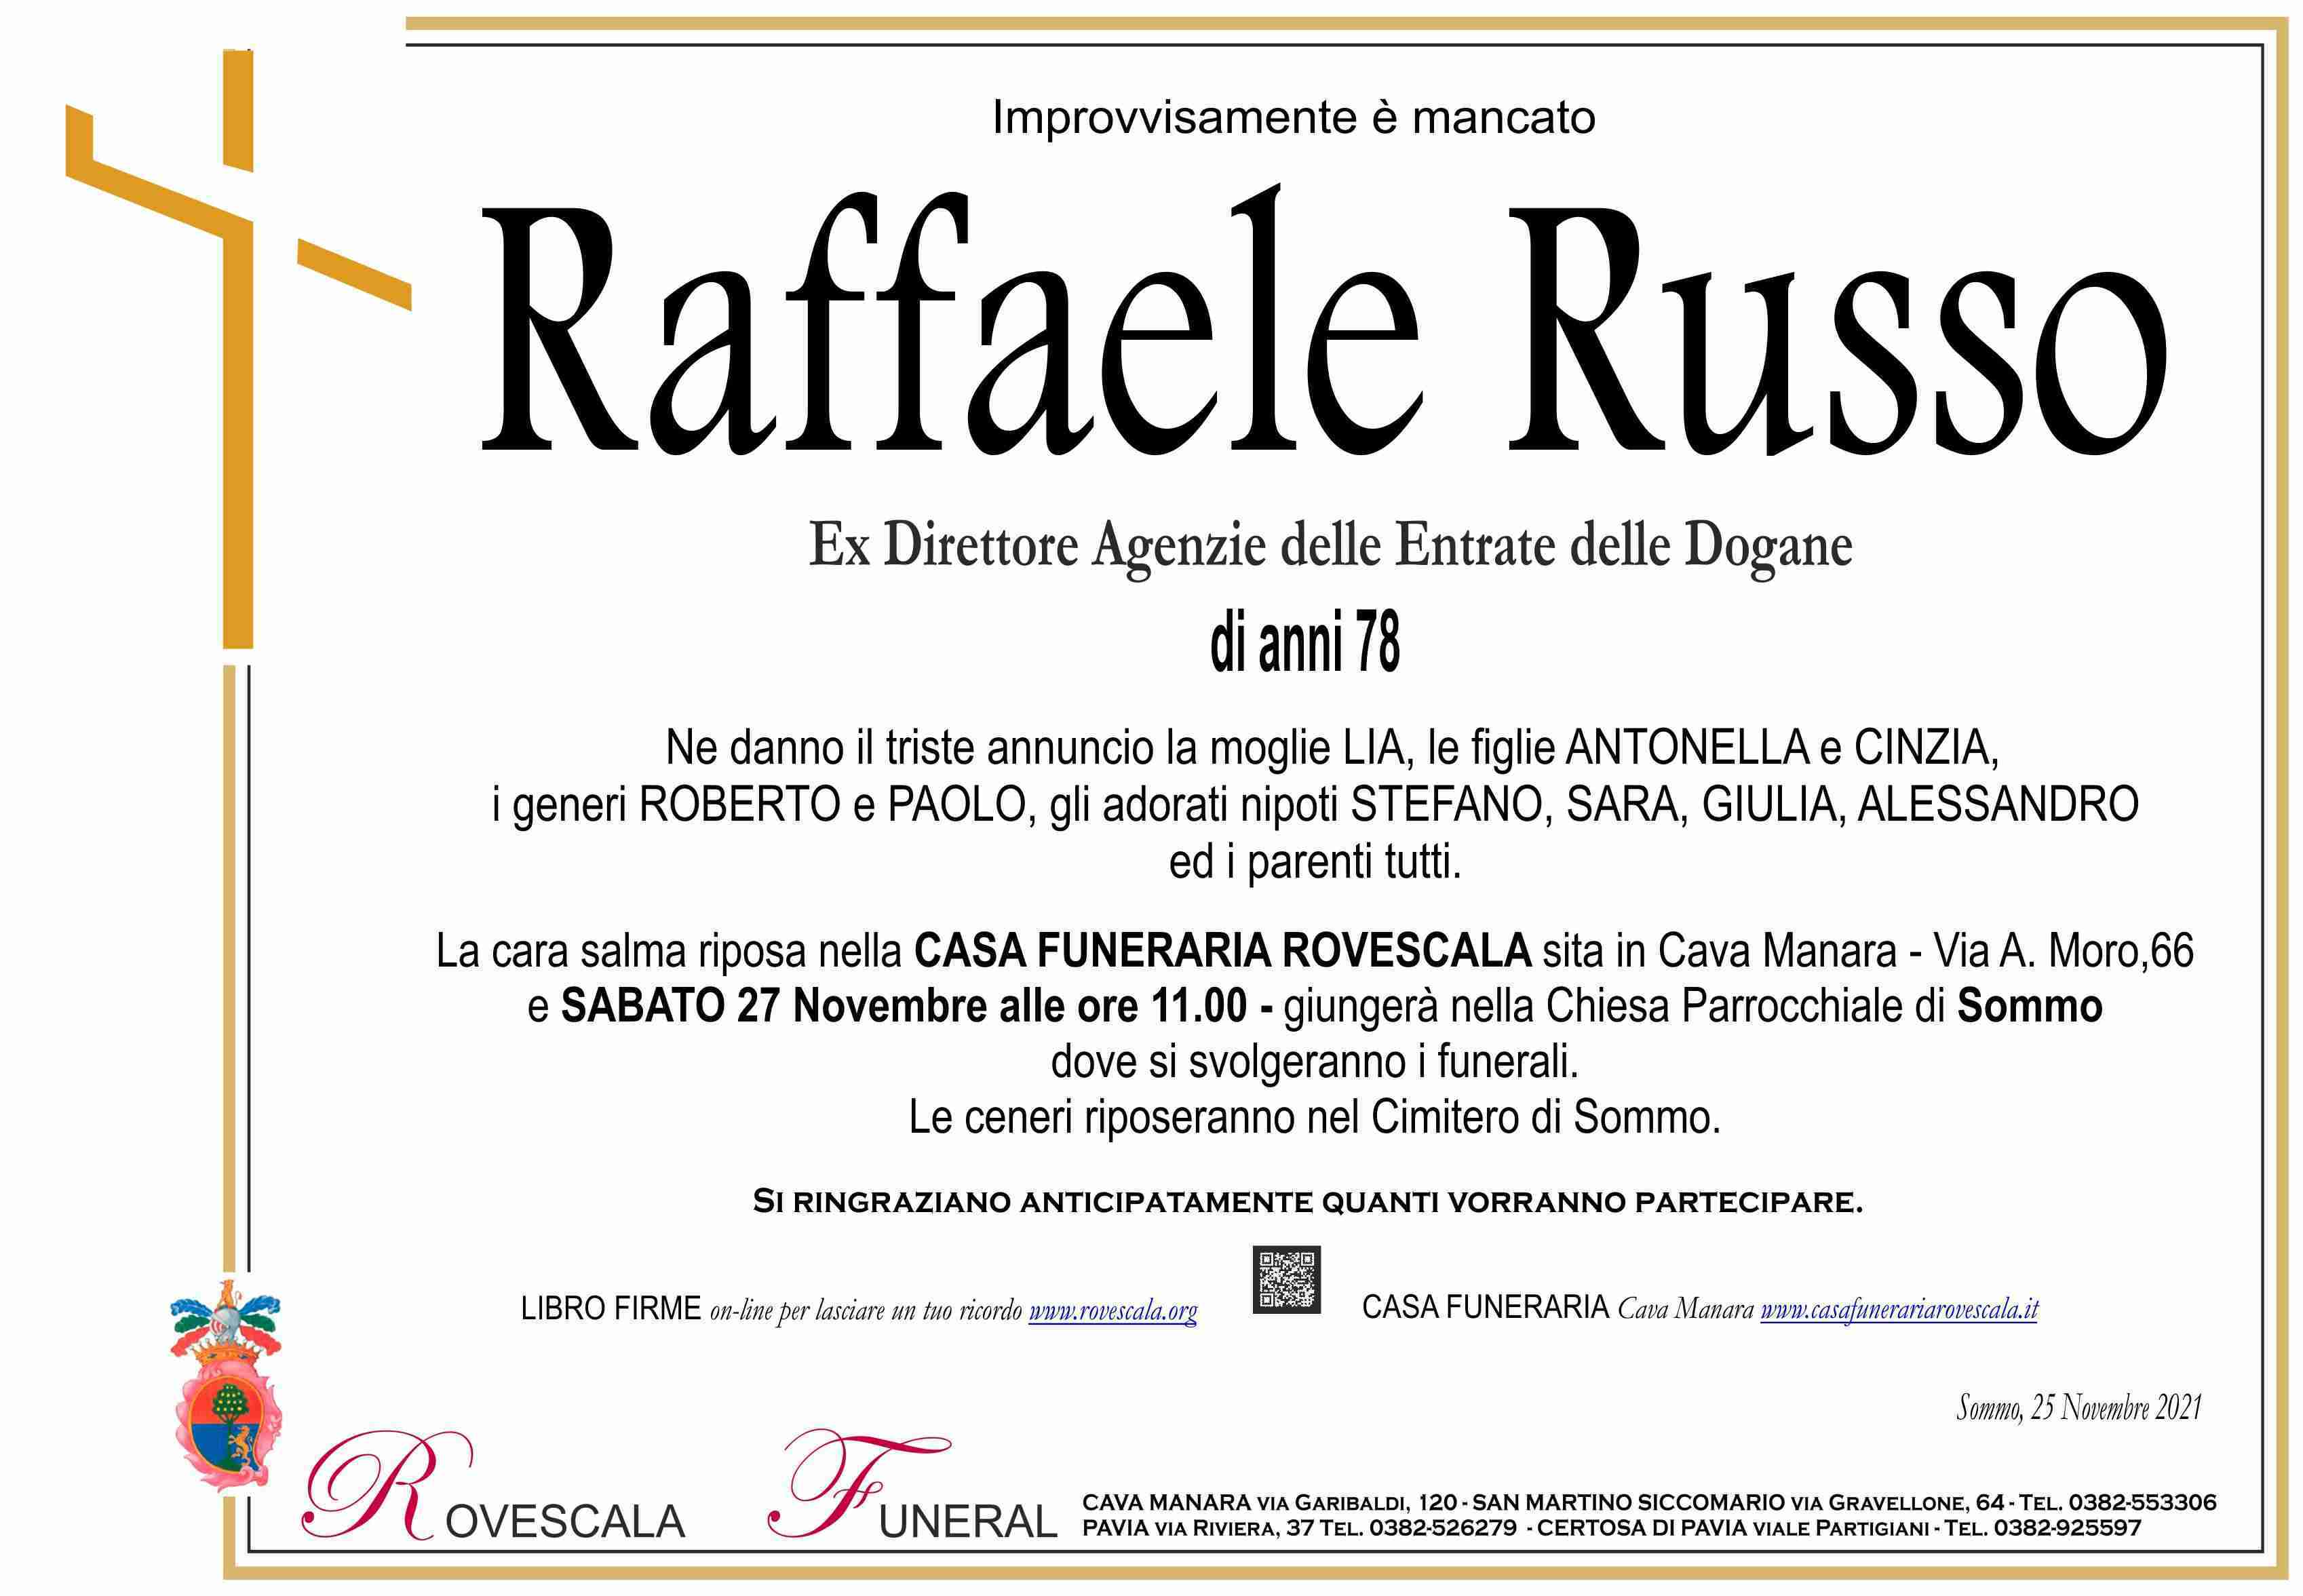 Raffaele Russo